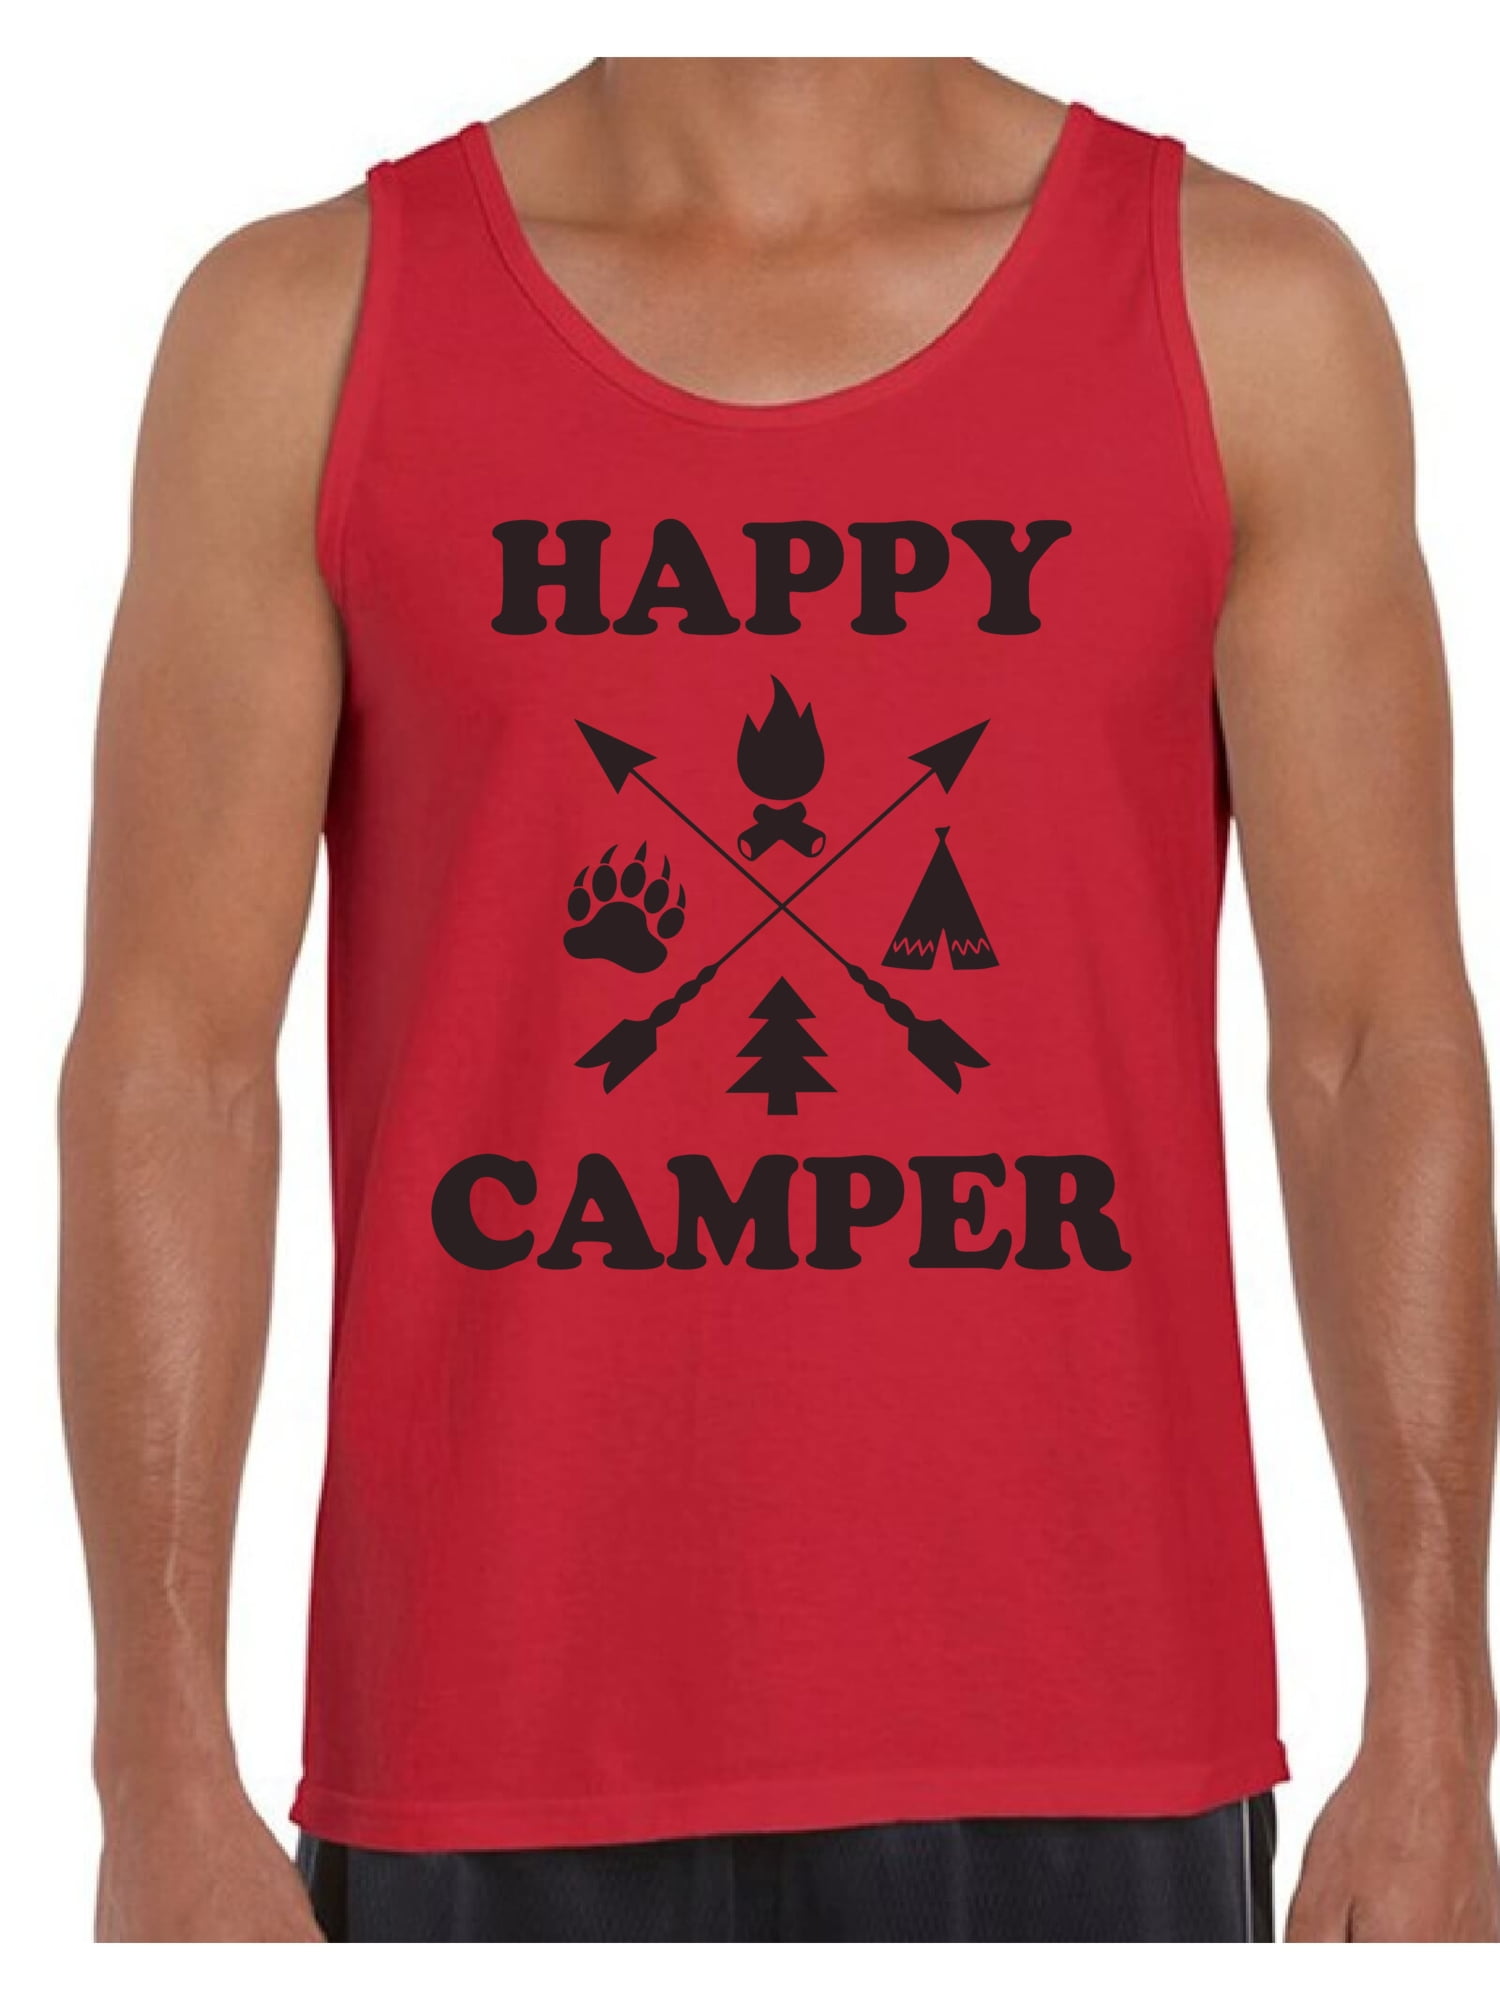 Happy Camper Funny Traveling Mens Tank Top Sleeveless Shirt 